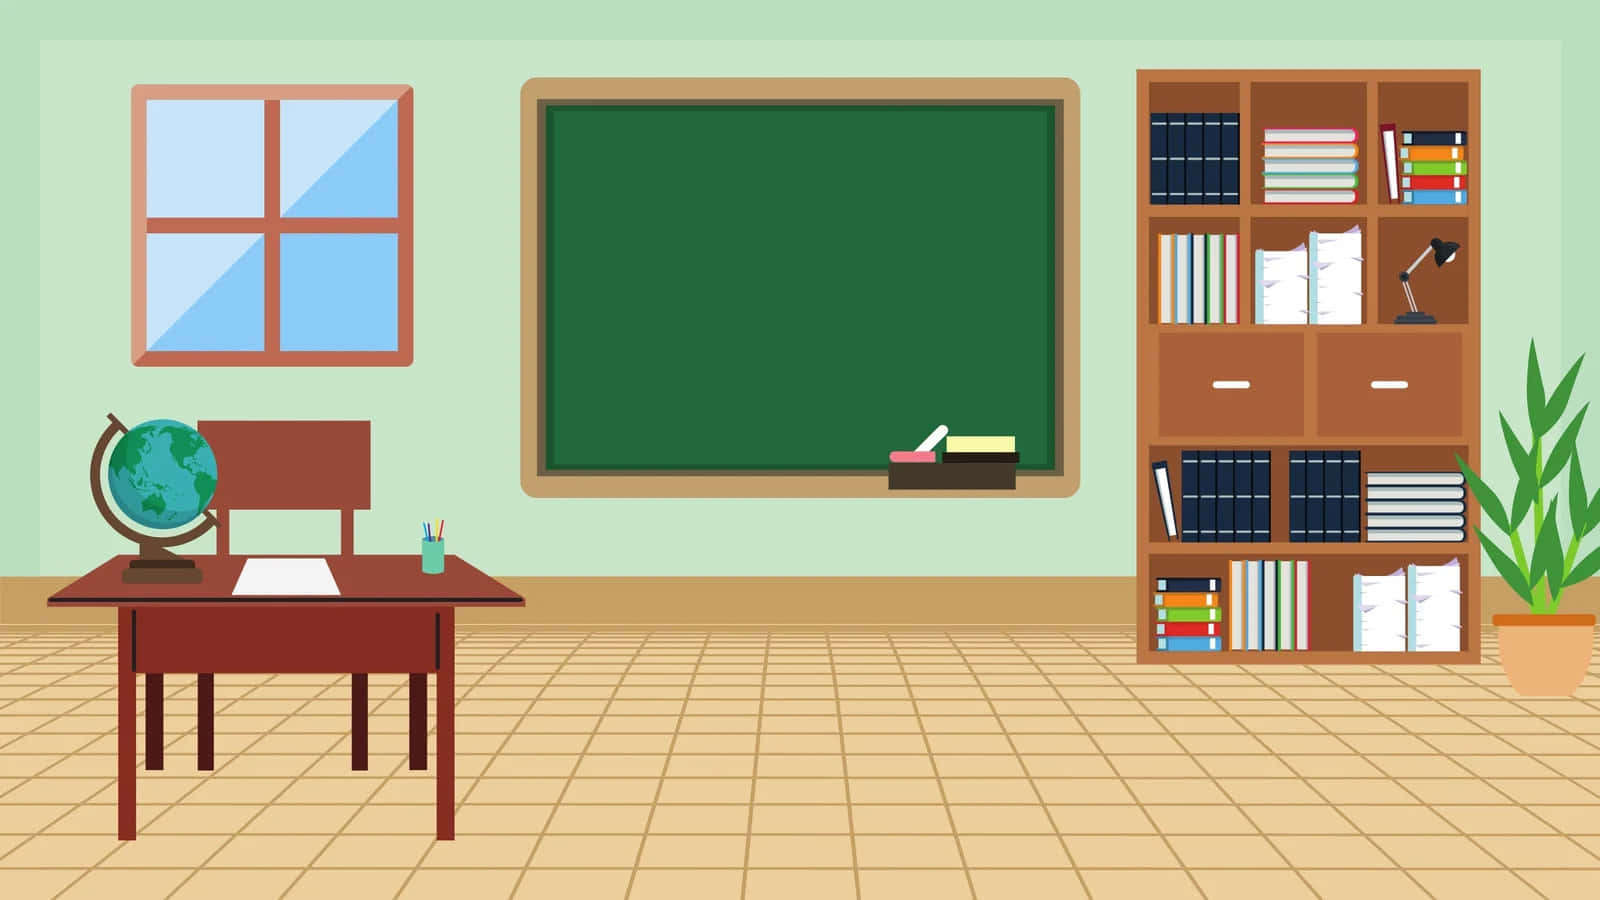 A Classroom With A Desk, Bookshelf And Chalkboard